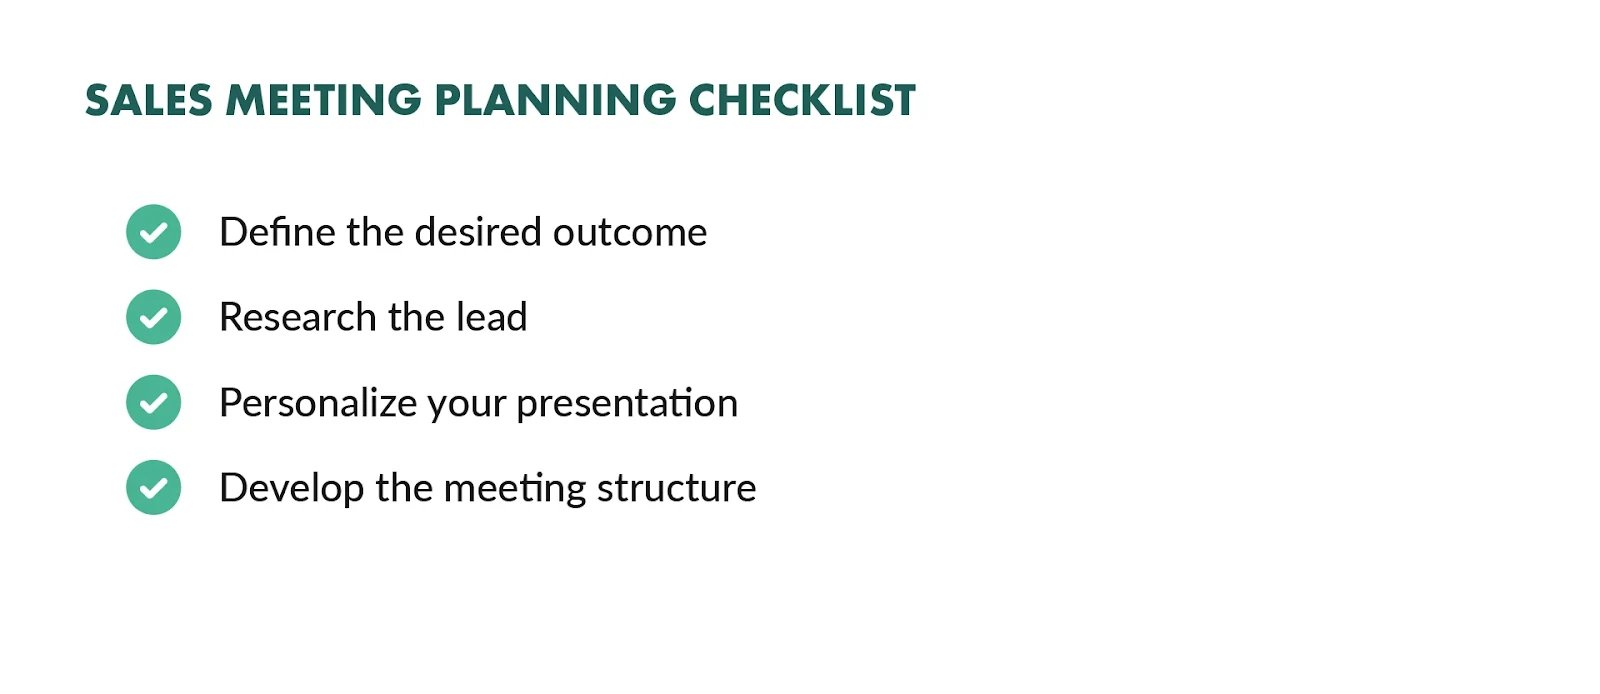 Sales meeting planning checklist